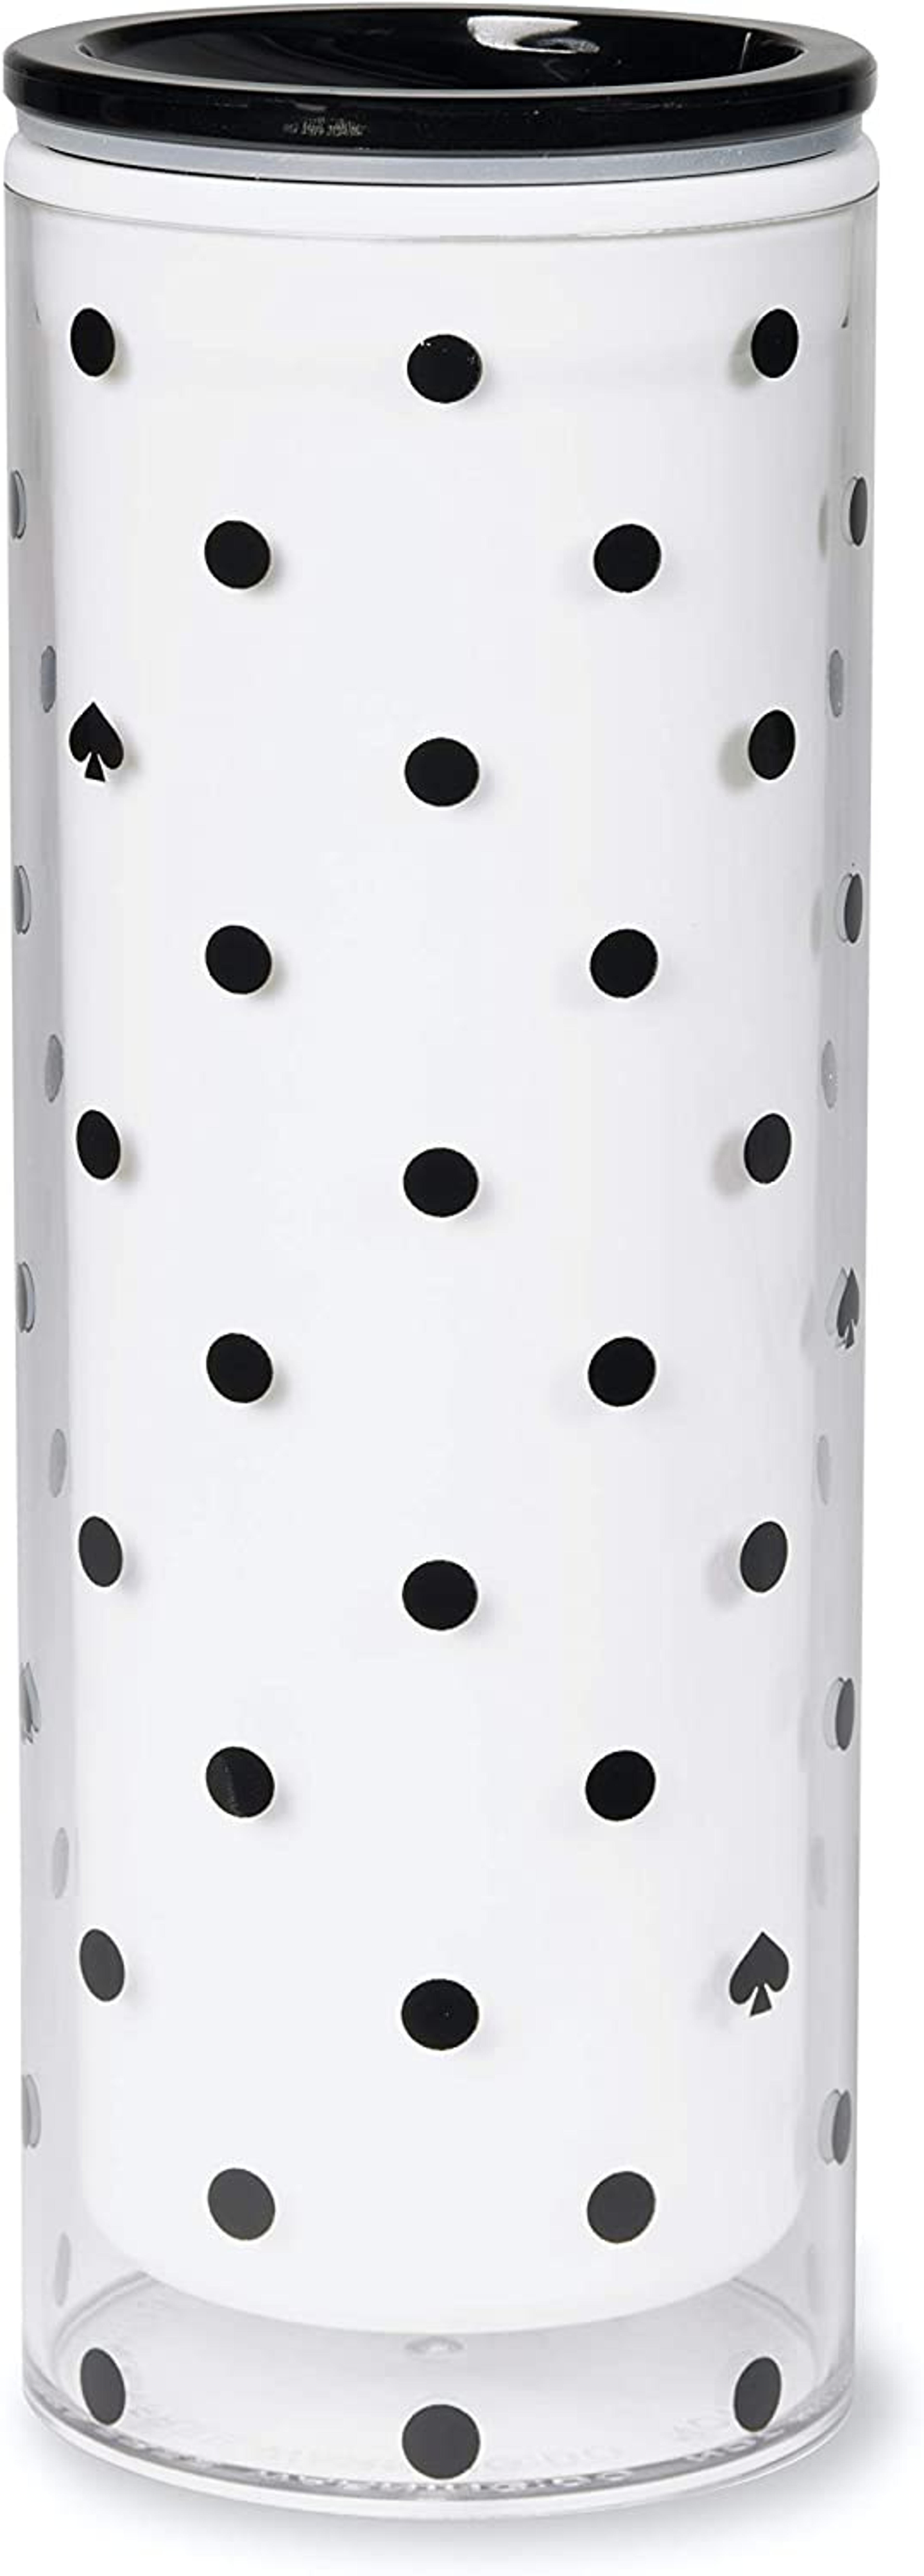 Kate Spade New York Polka Dot 16 Ounce Insulated Travel Mug with Lid, Double Wall Thermal Tumbler for Coffee/Tea, Black Spade Dot